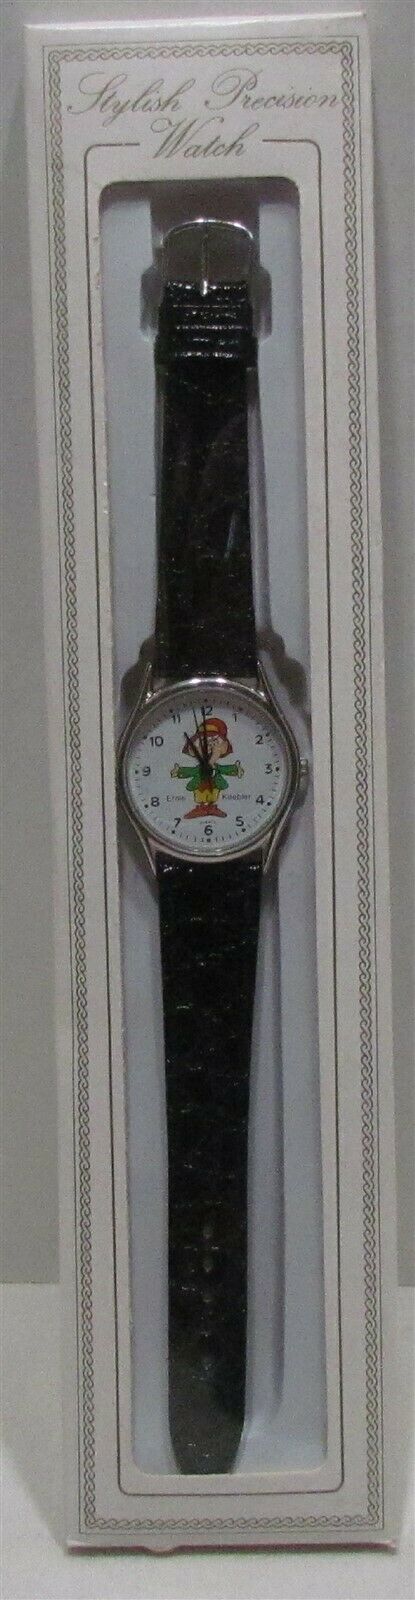 Vintage Keebler Wrist Watch Ernie Keebler, New In Box